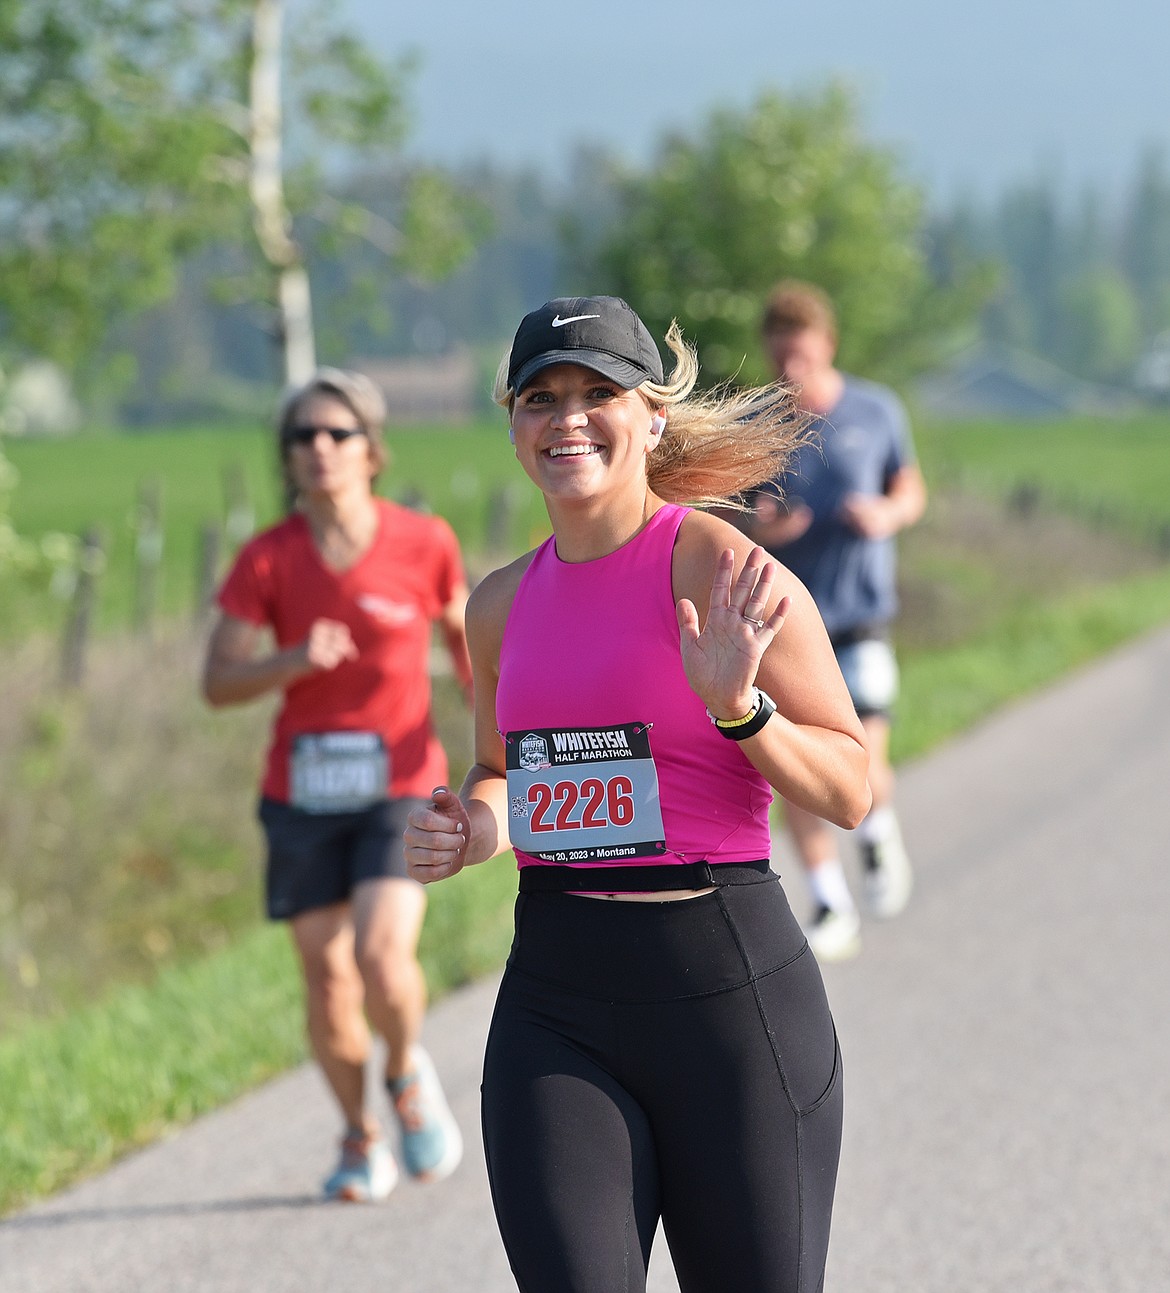 Brittni Mauro from Spokane competes in the half marathon race during the Whitefish Marathon on Saturday. (Julie Engler/Whitefish Pilot)